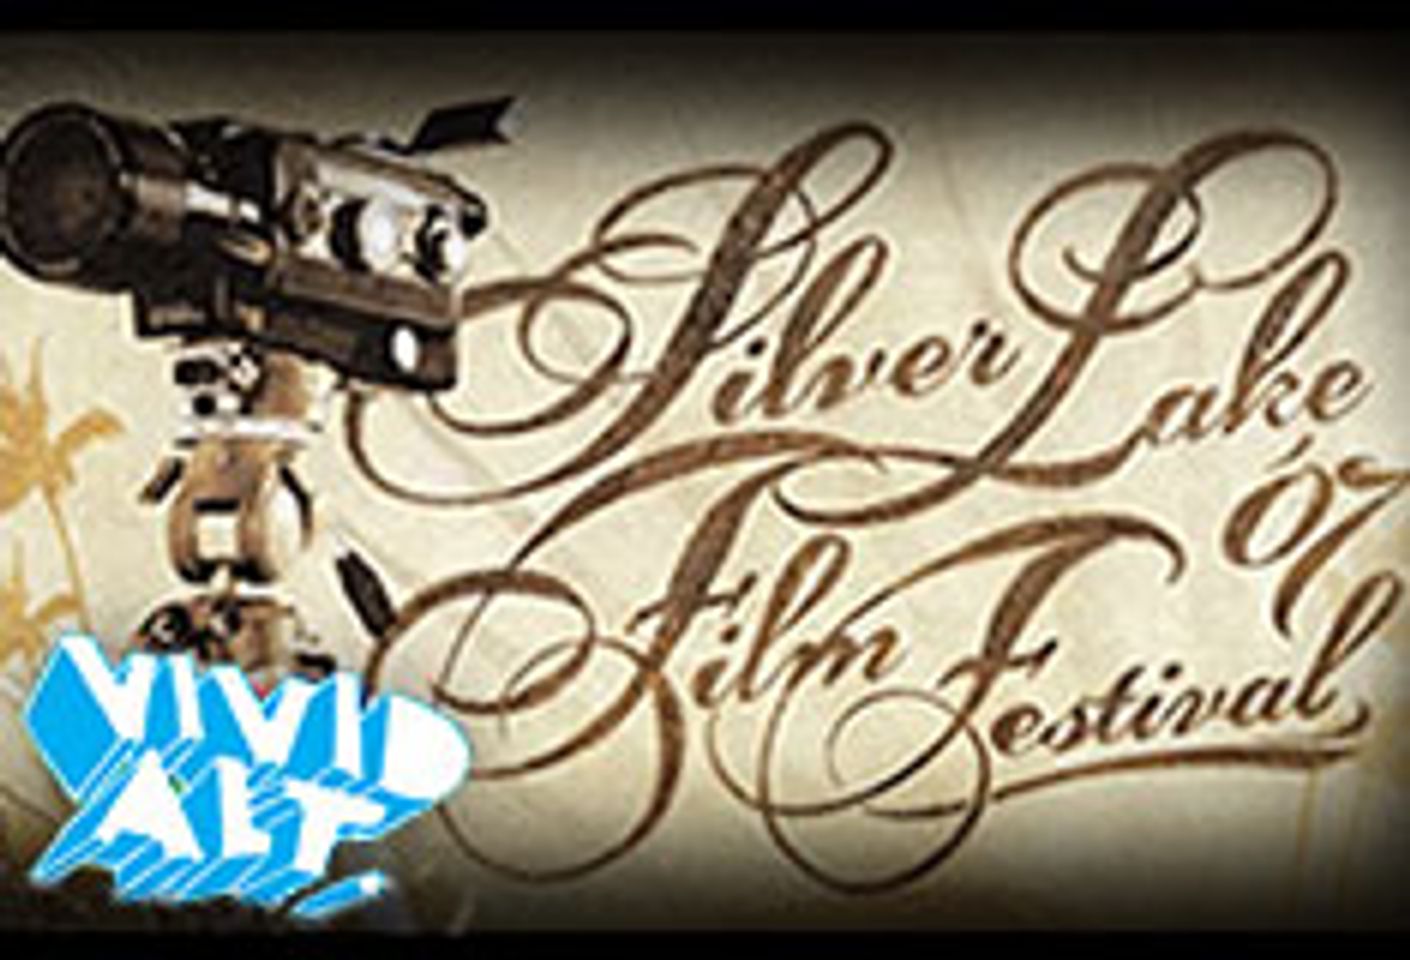 Vivid Alt Featured in Silver Lake Film Festival Showcase